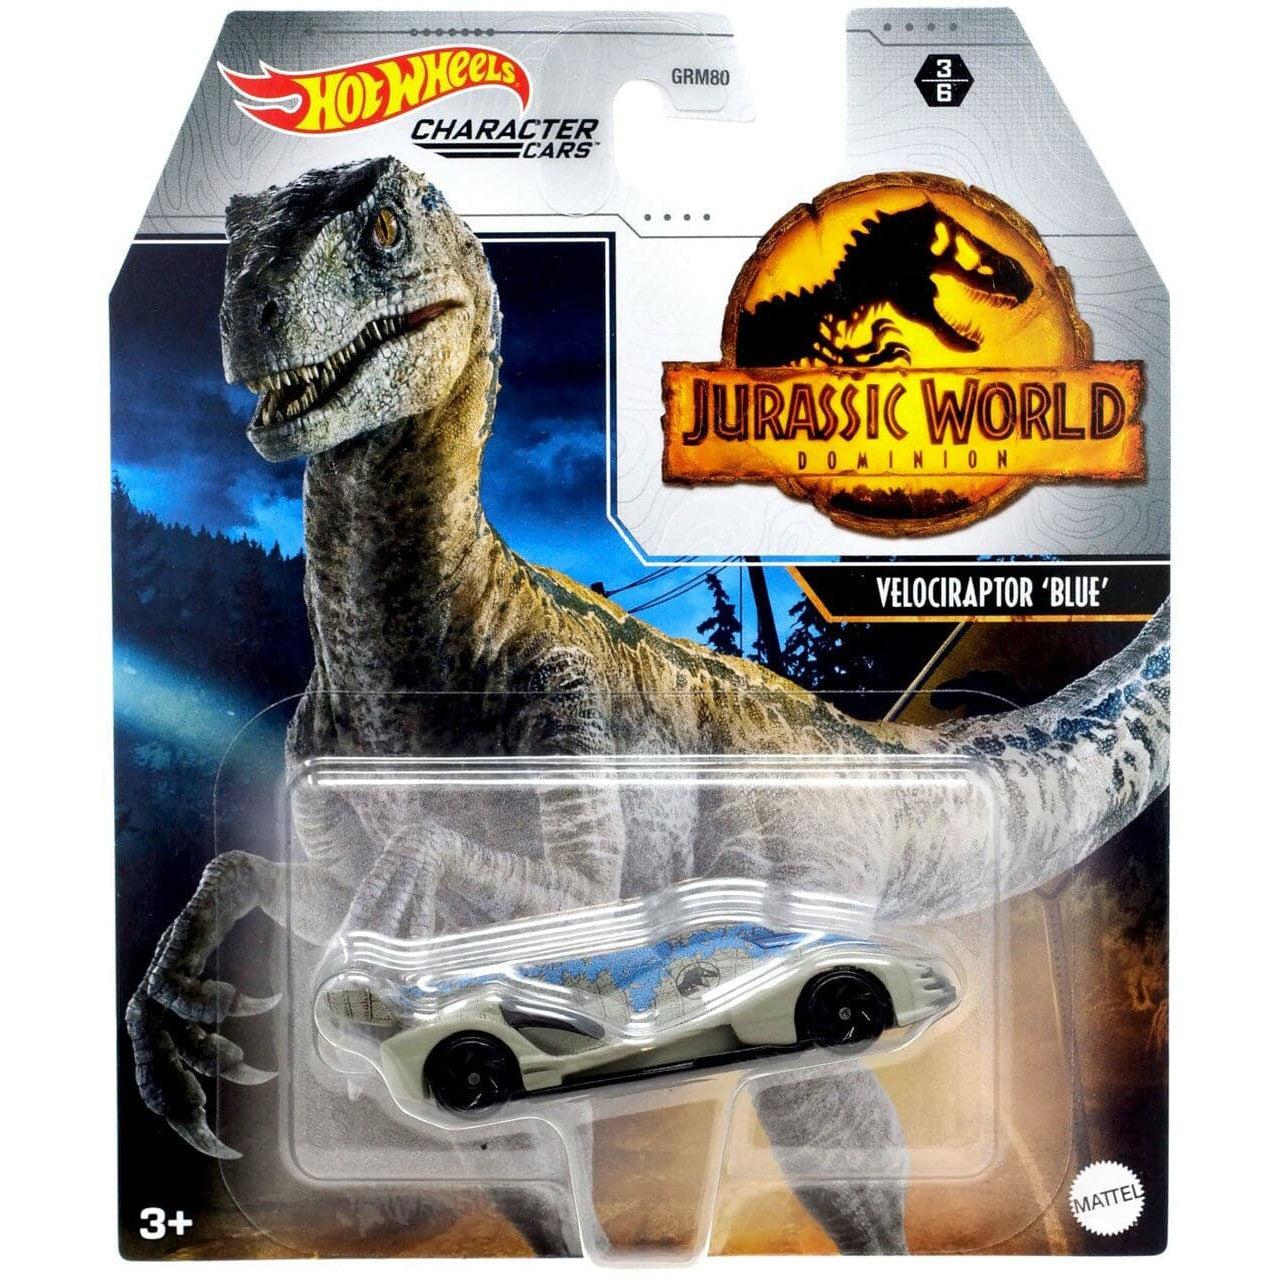 Mattel-Hot Wheels Jurassic Park: Dominion Character Cars-GWR52-Velociraptor 'Blue'-Legacy Toys